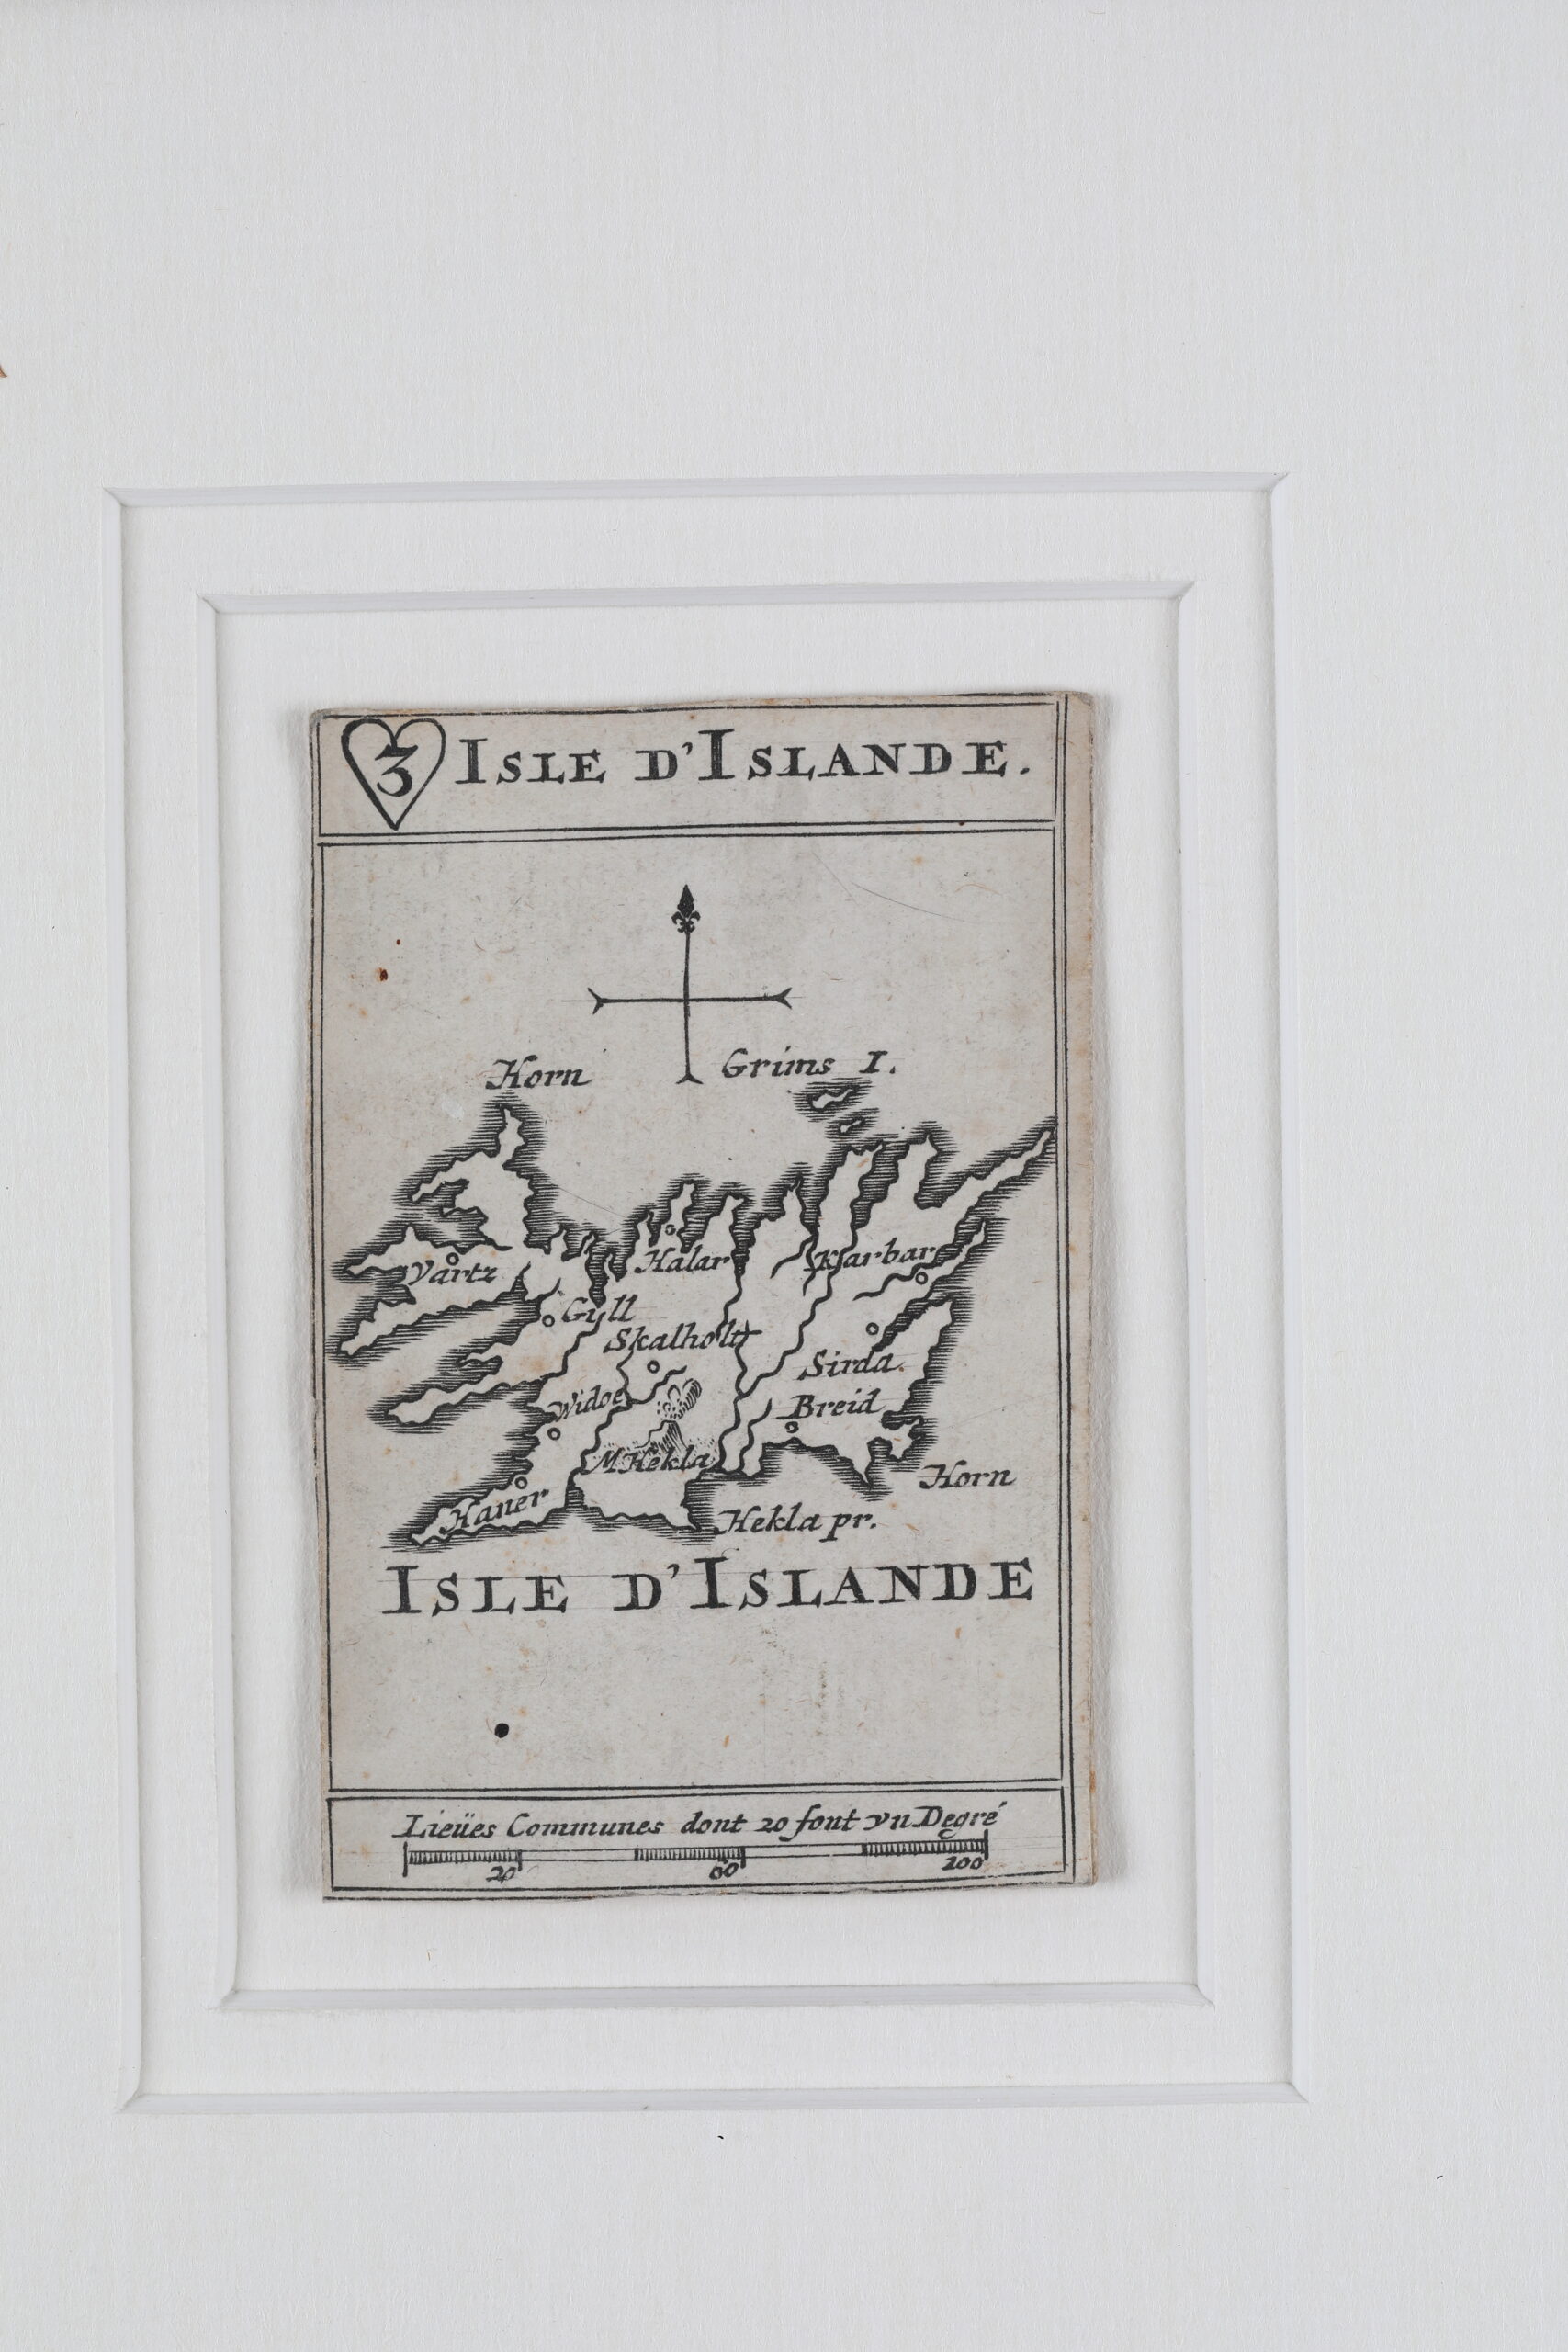 Isle d’Islande